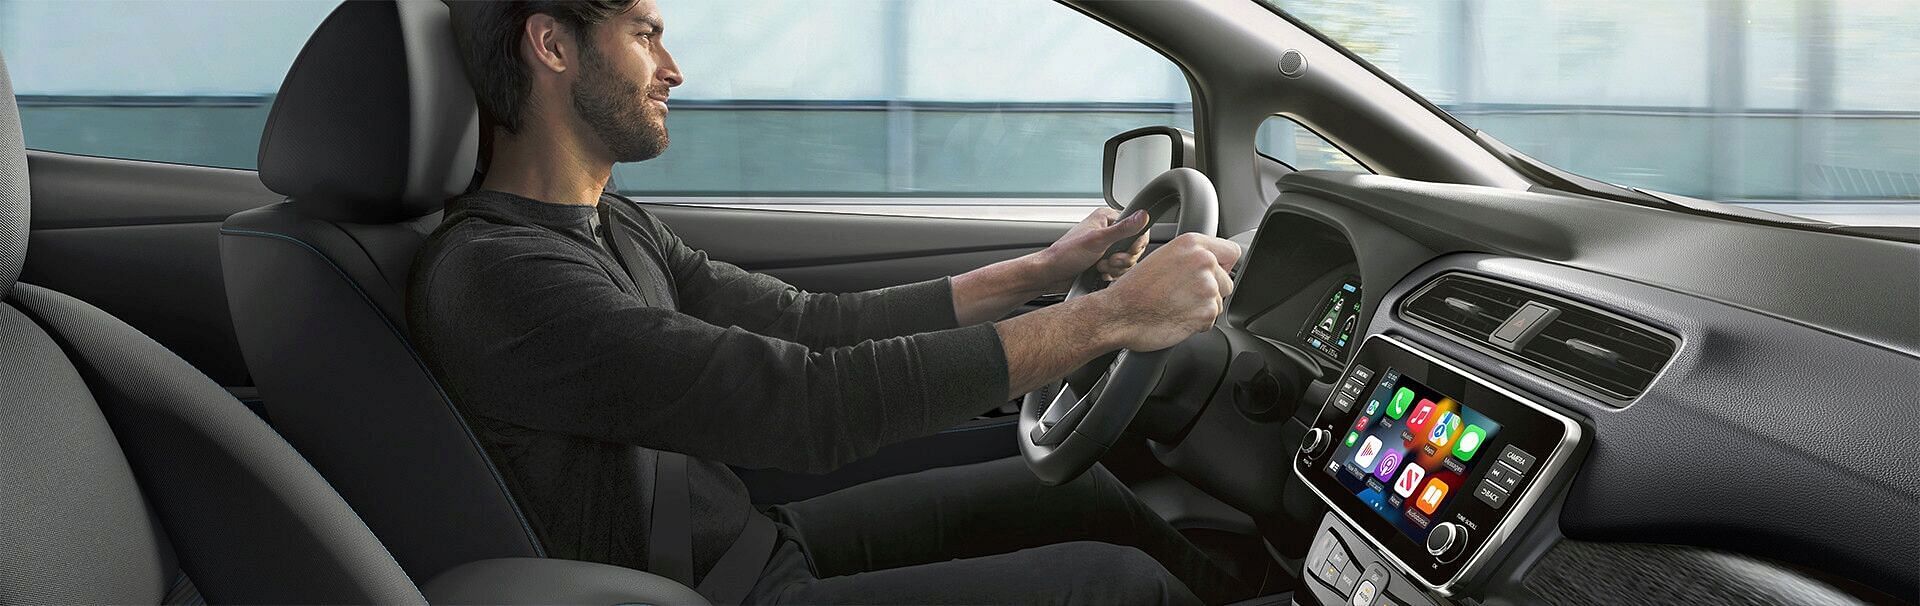 Cockpit view with a man driving a Nissan Leaf EV.